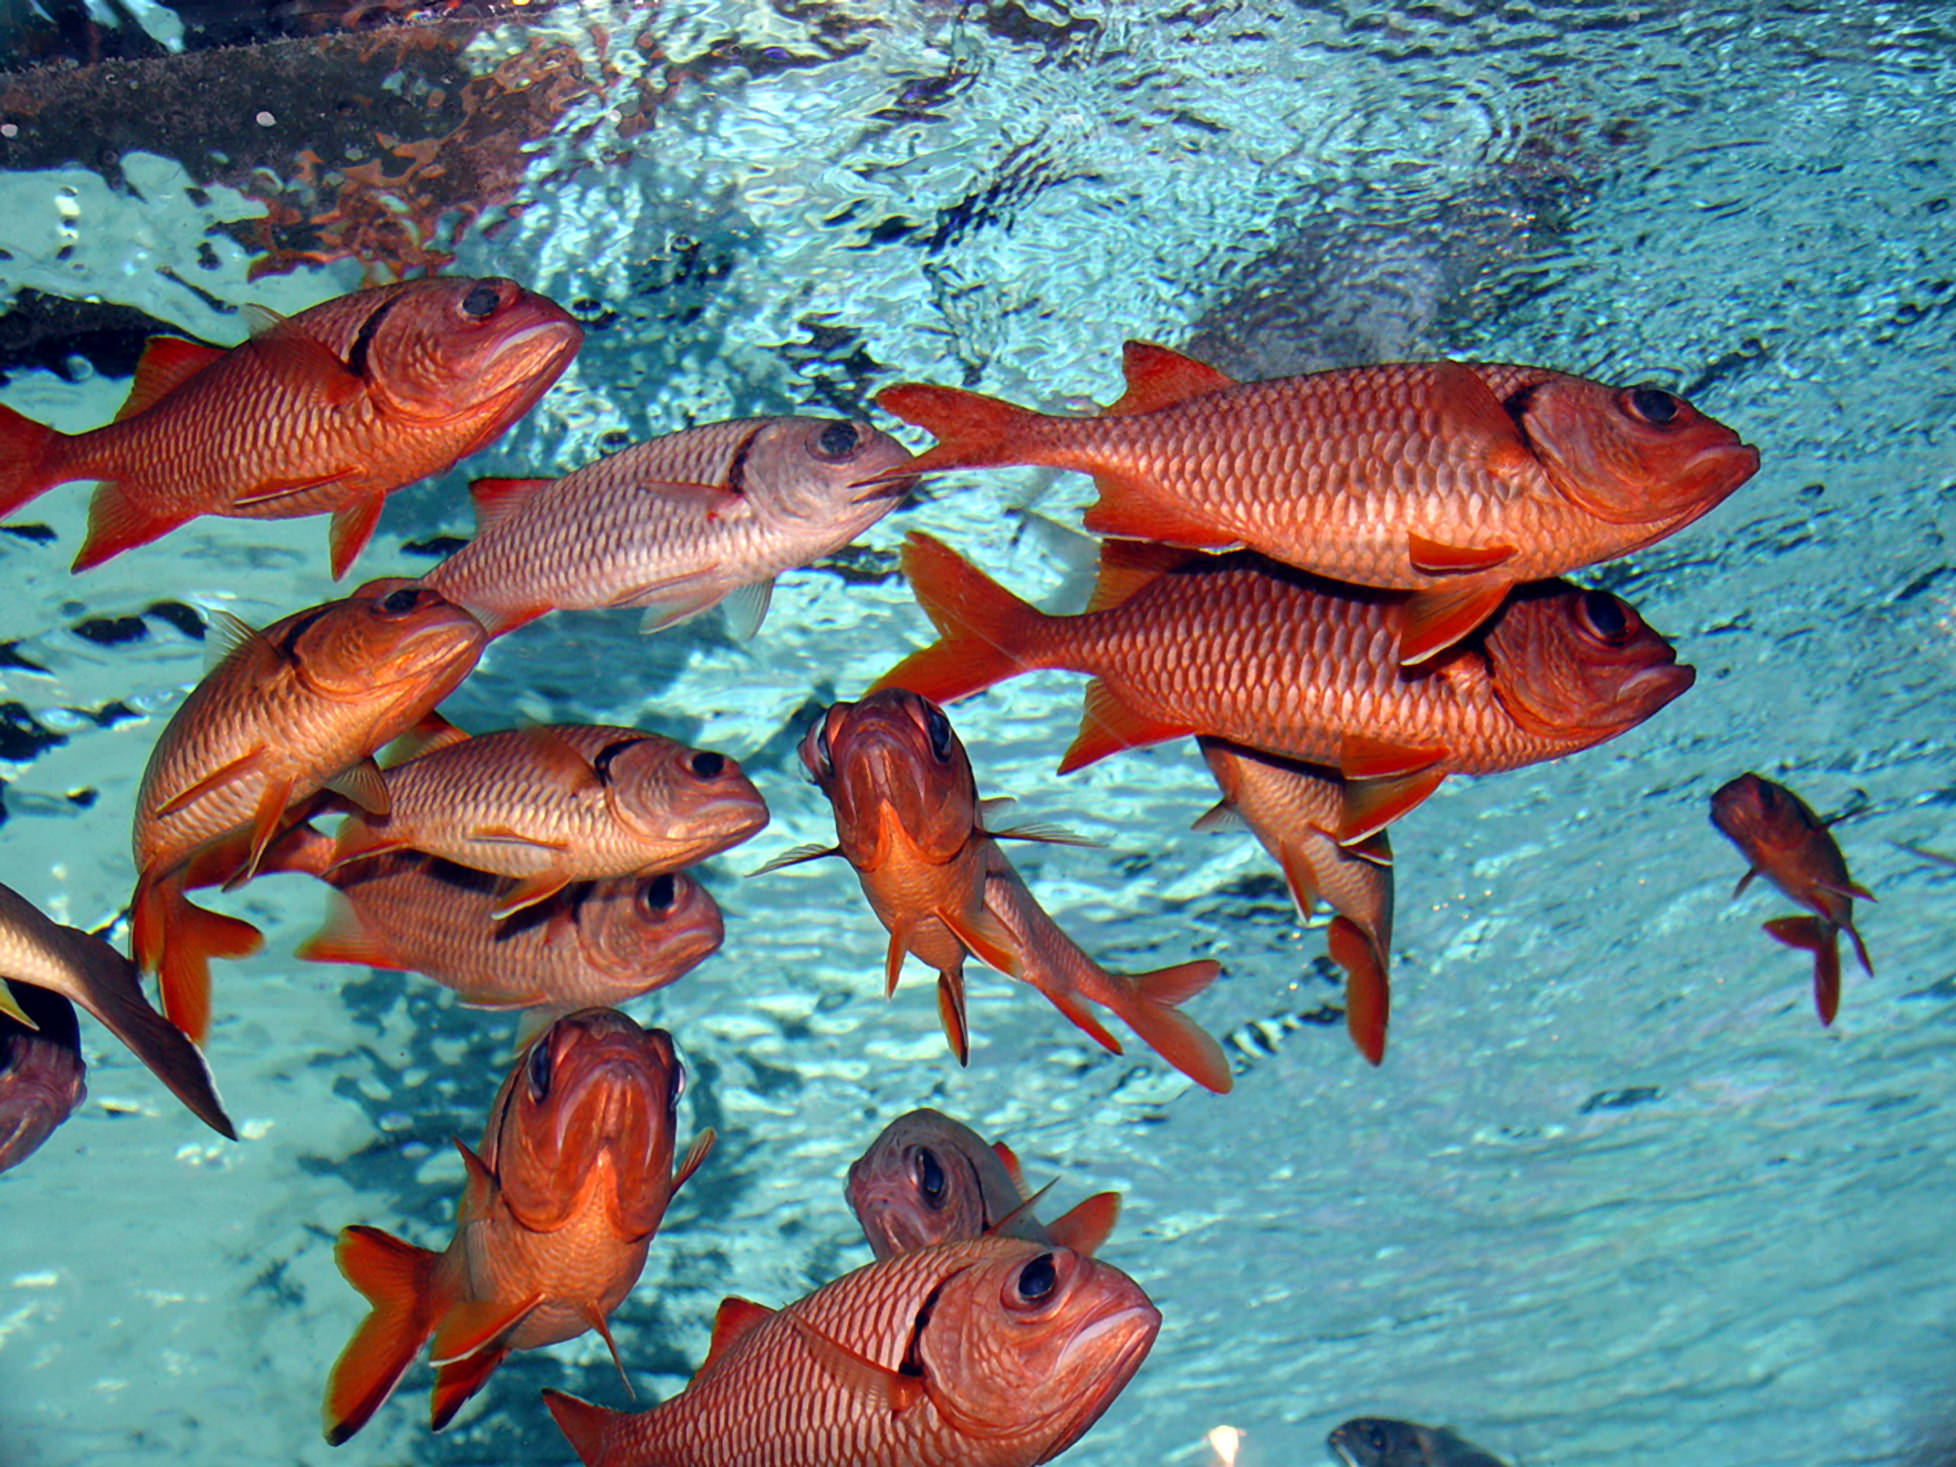 https://www.peta.org.uk/wp-content/uploads/2015/02/Stock-fish-swimming_mini.jpg